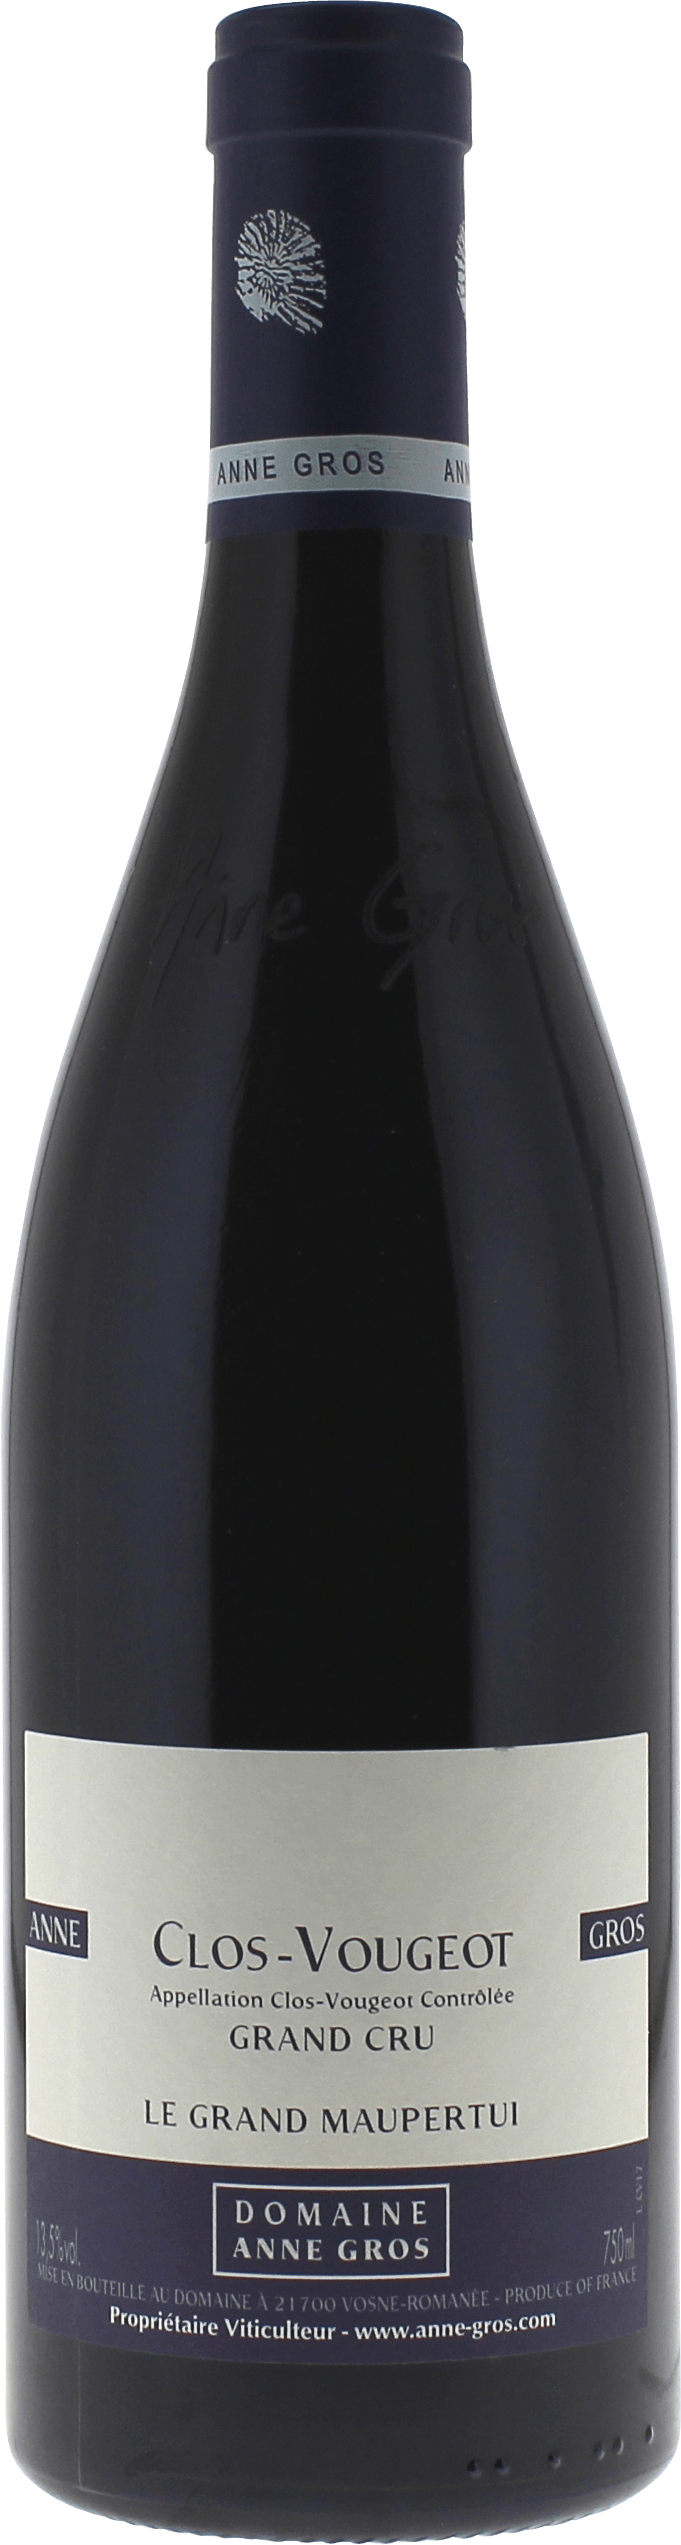 Clos vougeot grand cru le grand maupertui 2015  GROS Anne, Bourgogne rouge